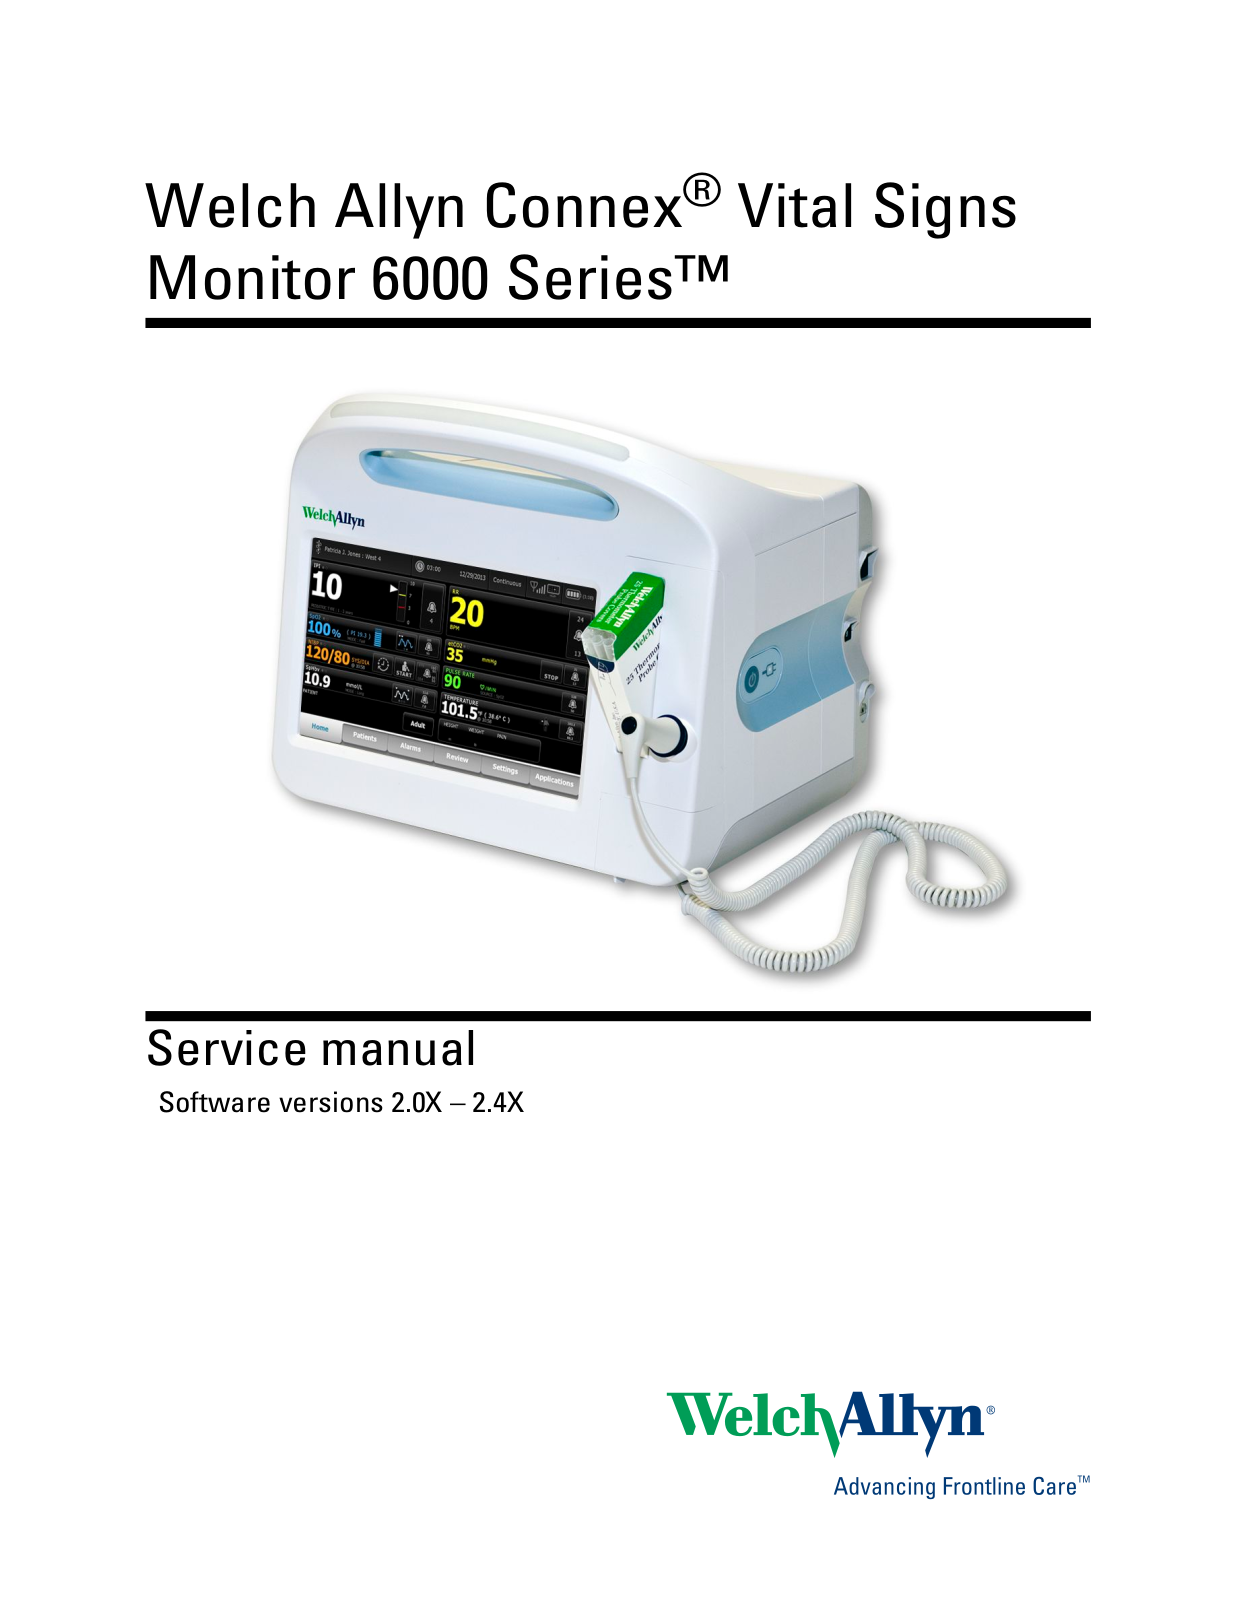 Welch Allyn Connex Vital Signs Monitor 6000 User manual